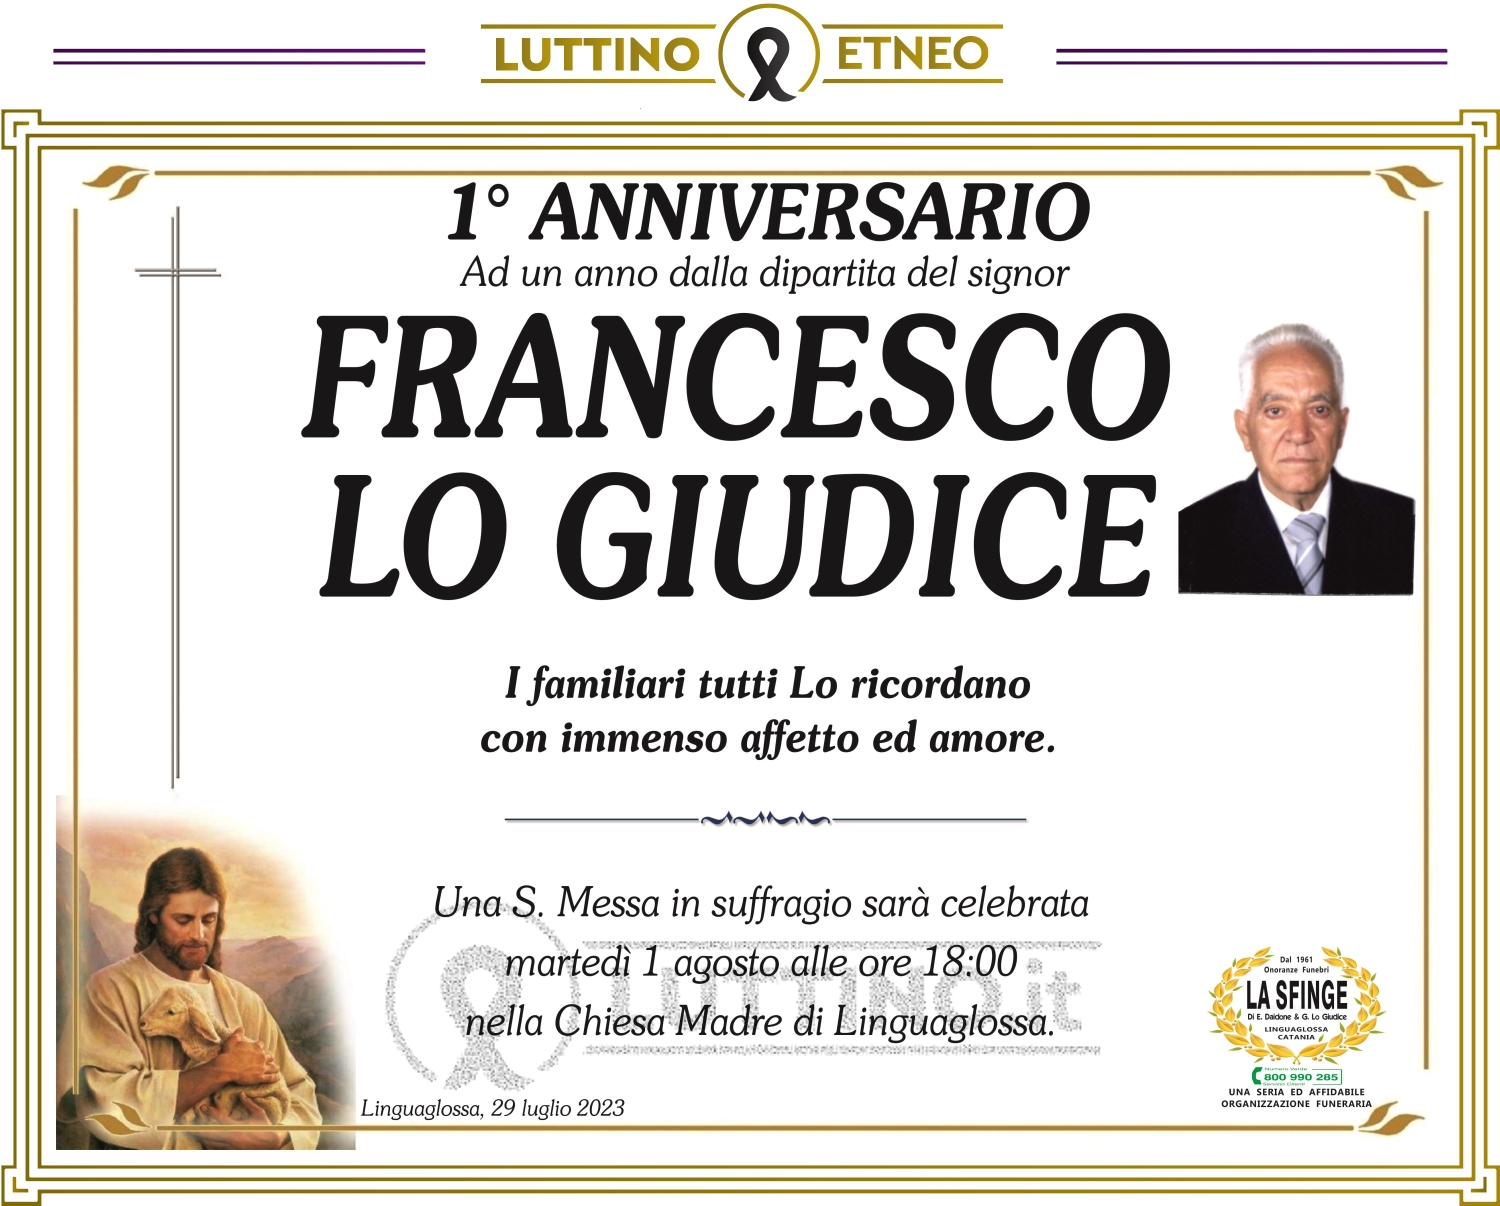 Francesco Lo Giudice